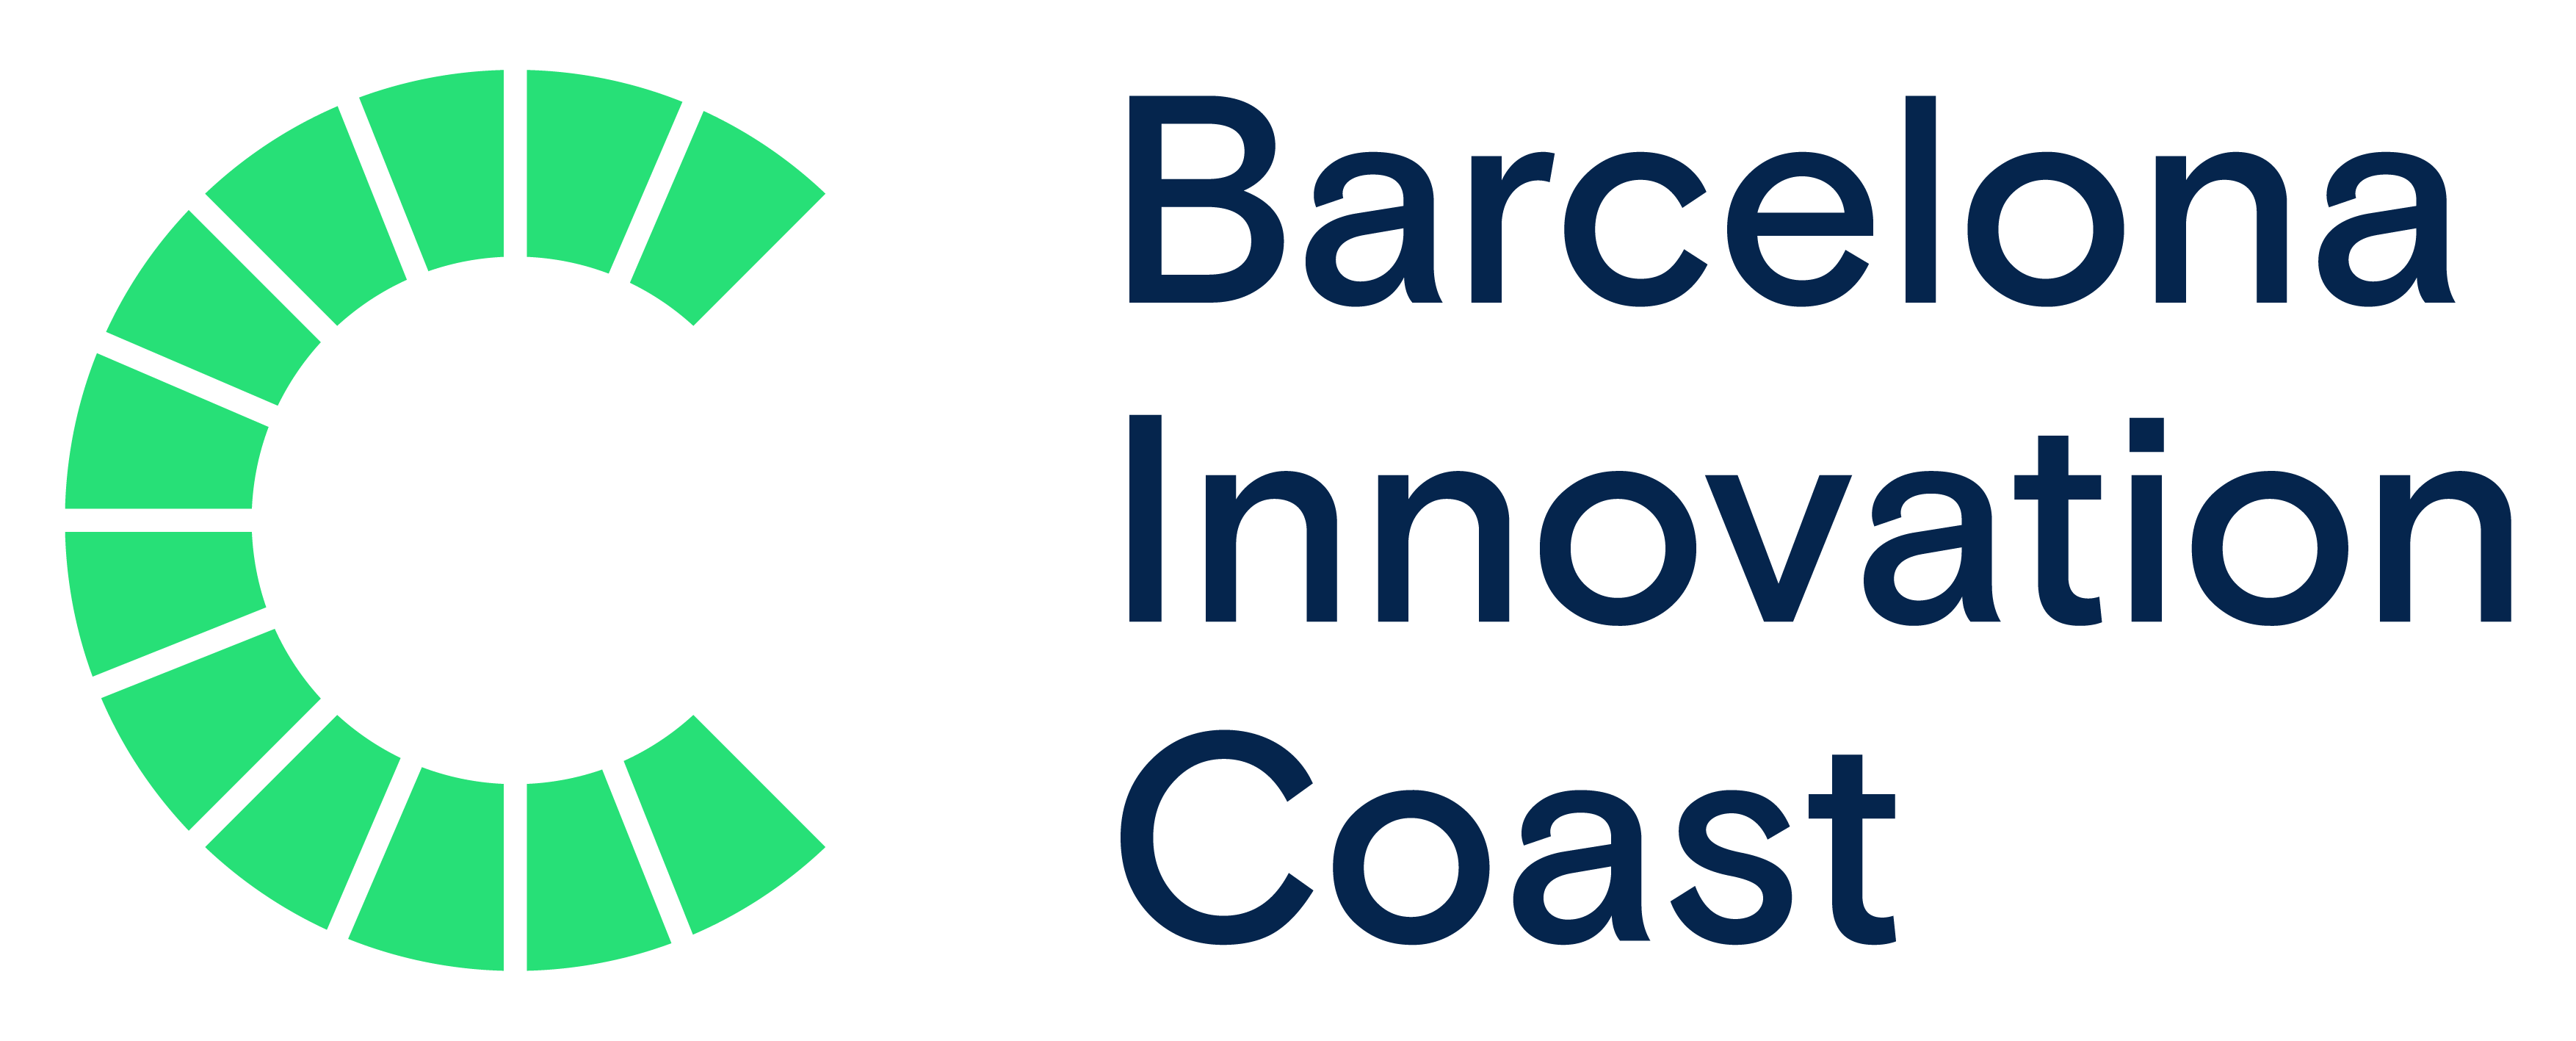 bcn innovation coast